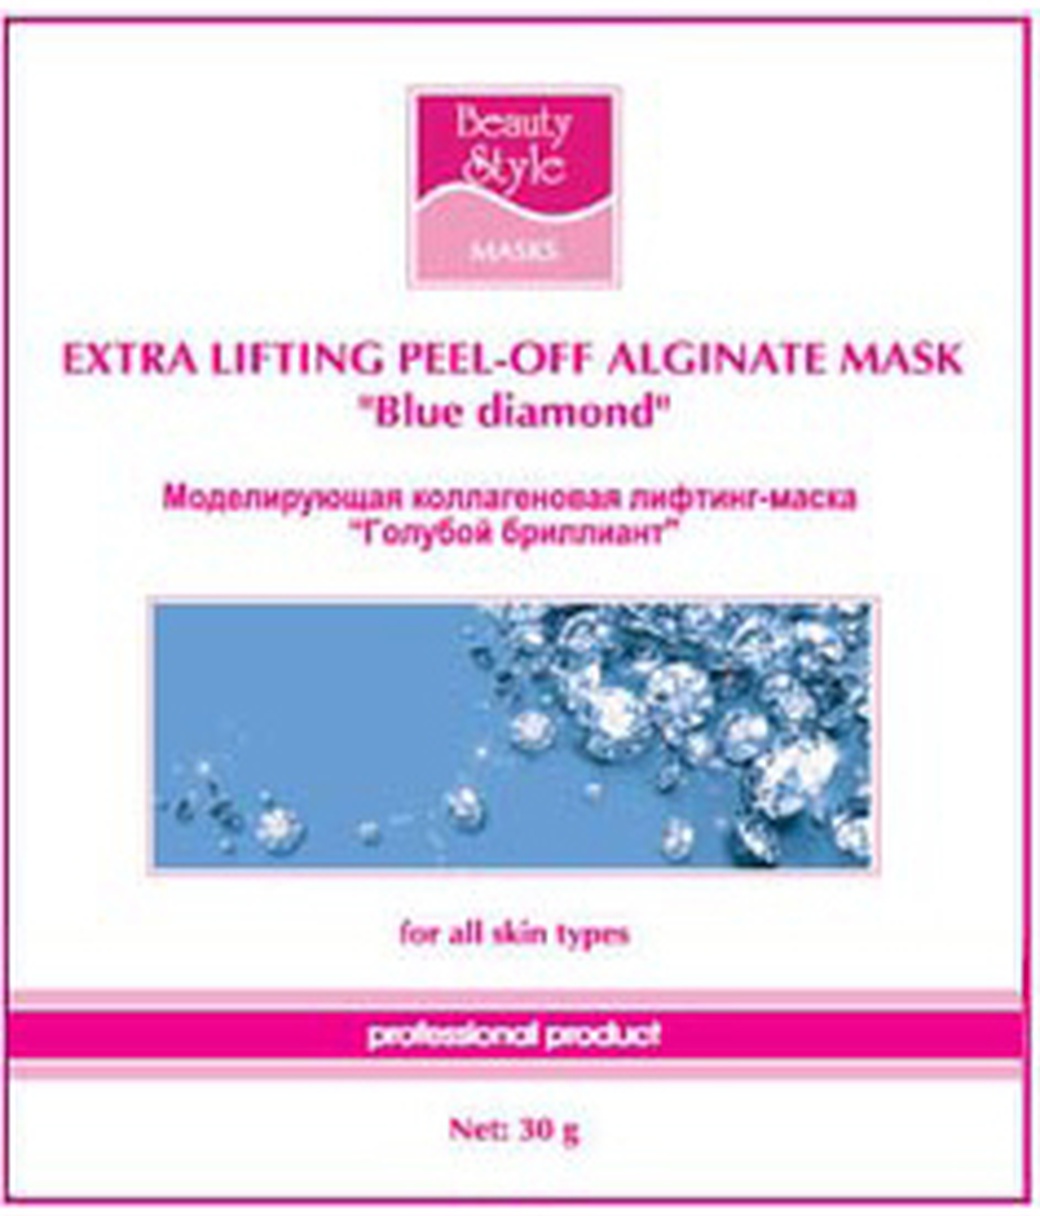 Моделирующая коллагеновая лифтинг-маска "Голубой бриллиант" 30гр Beauty Style фото